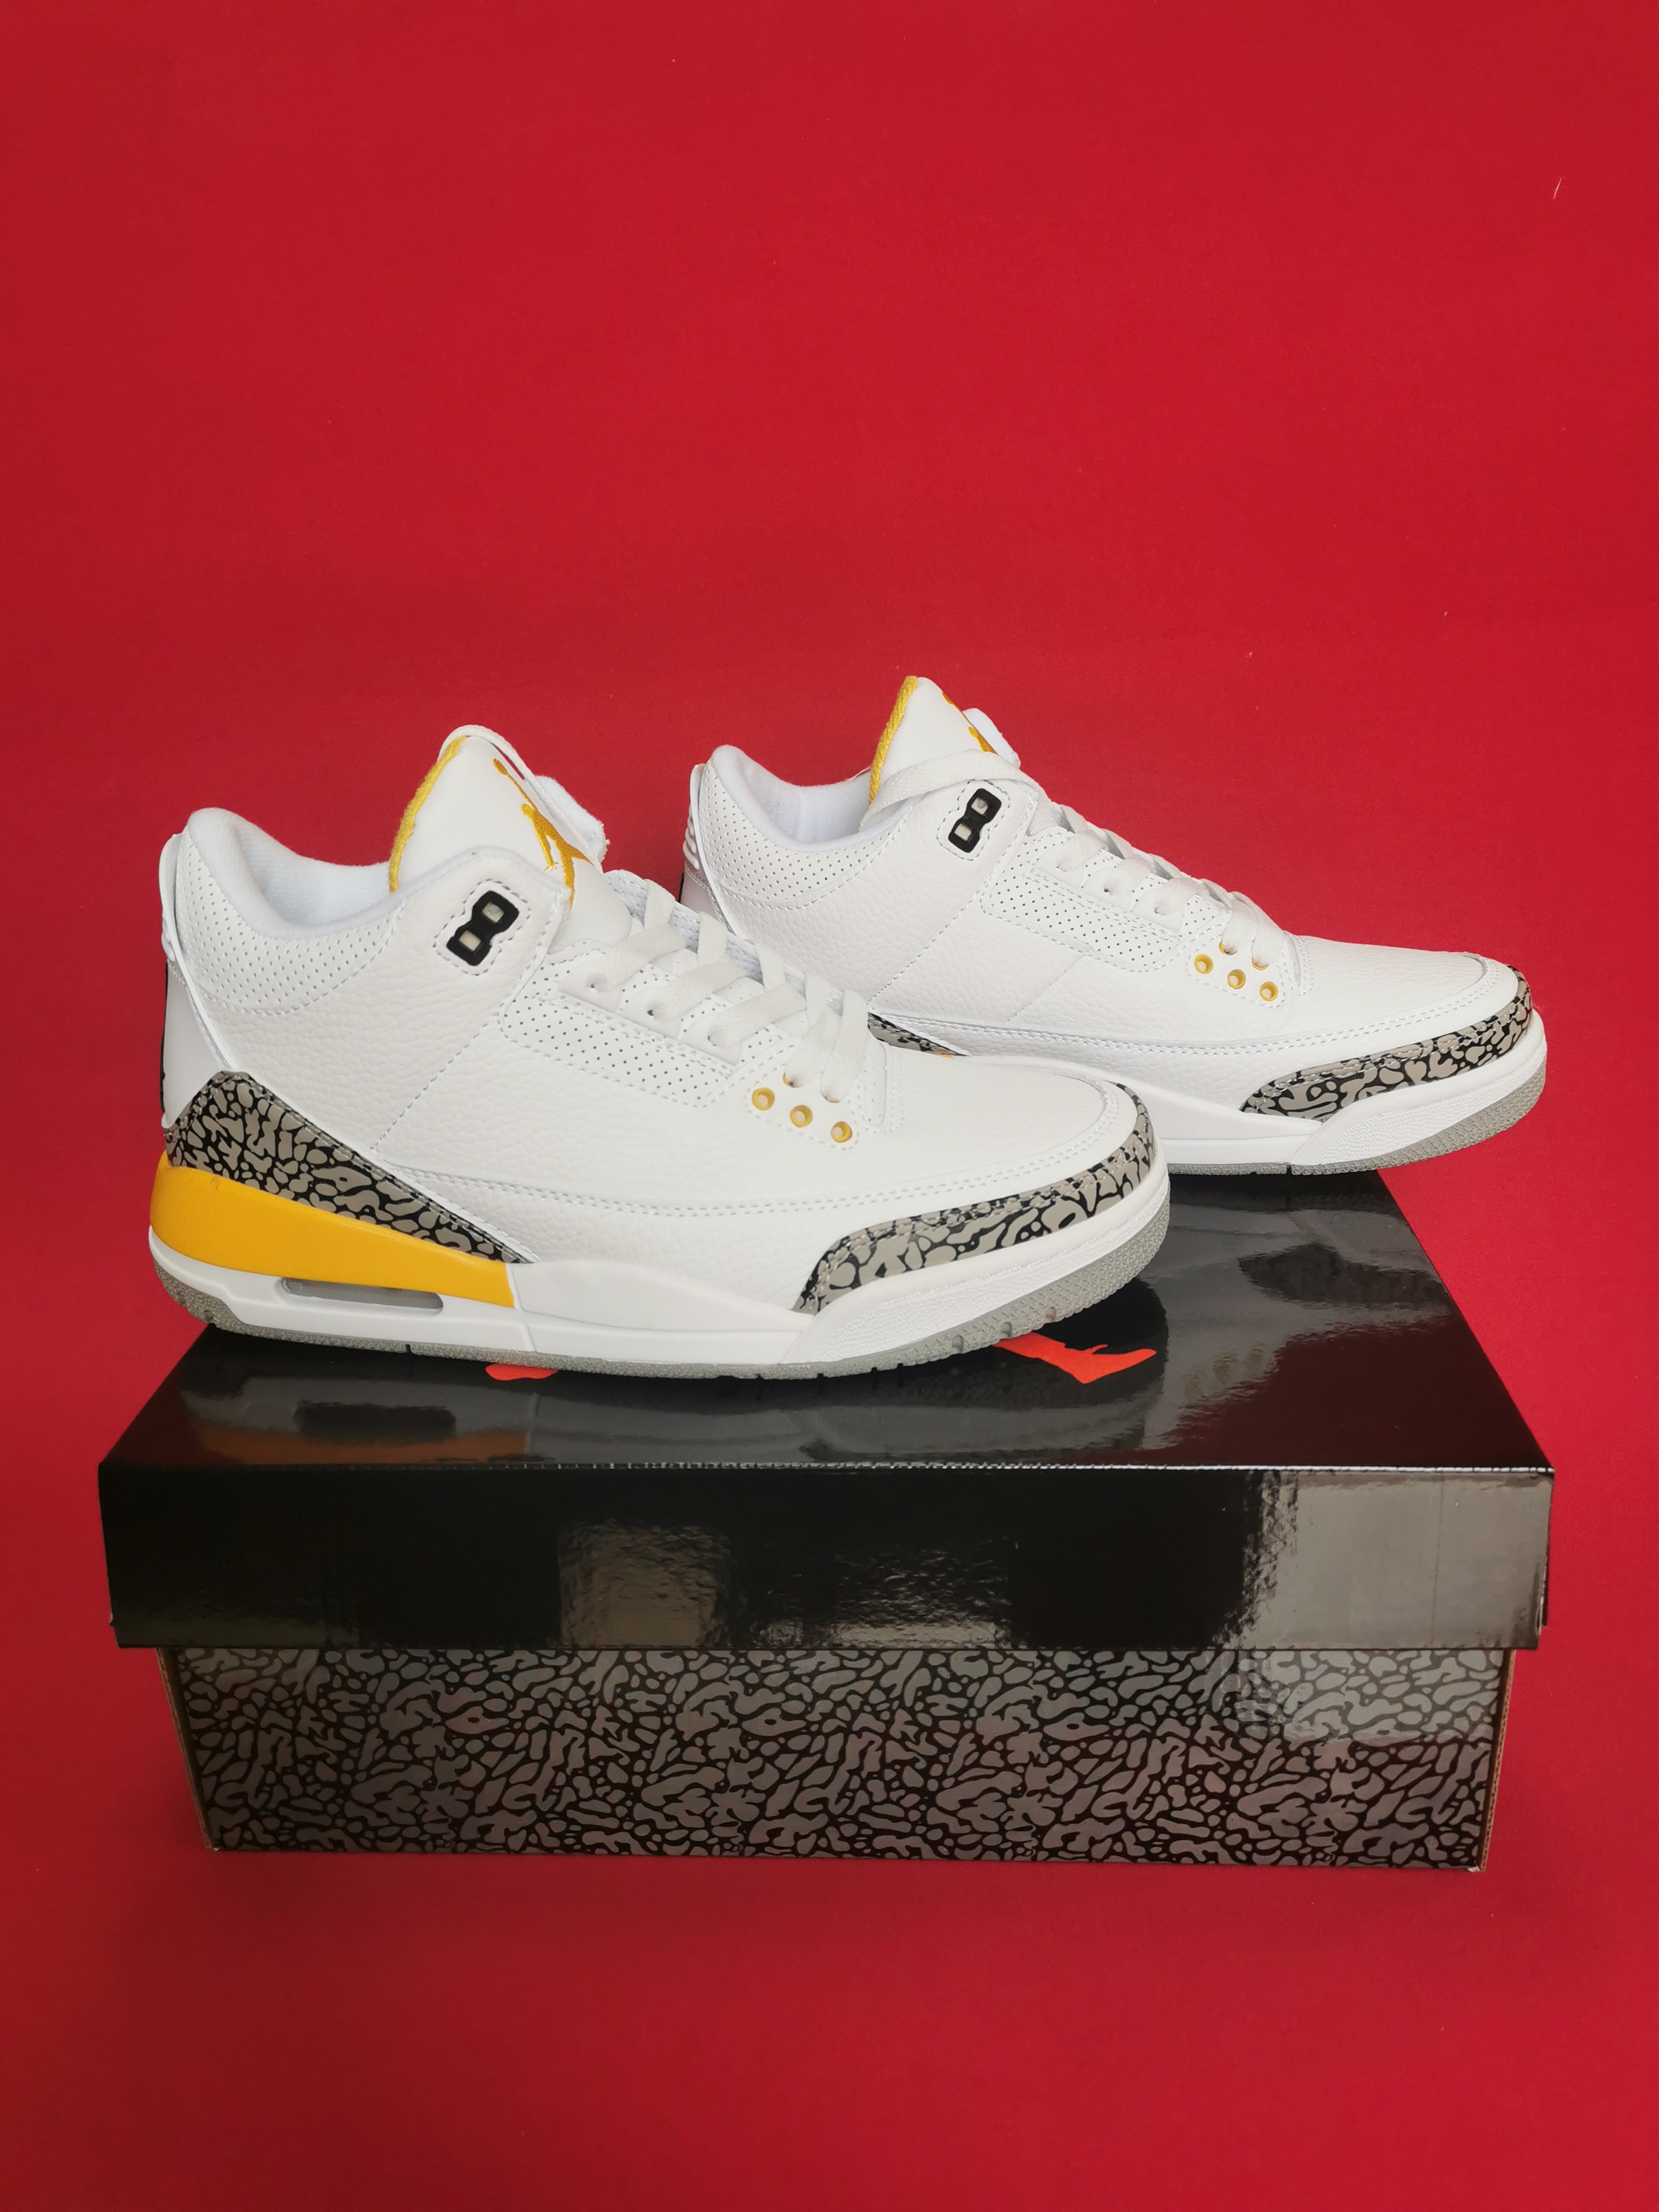 Air Jordan 3 OG White Yellow Grey Shoes